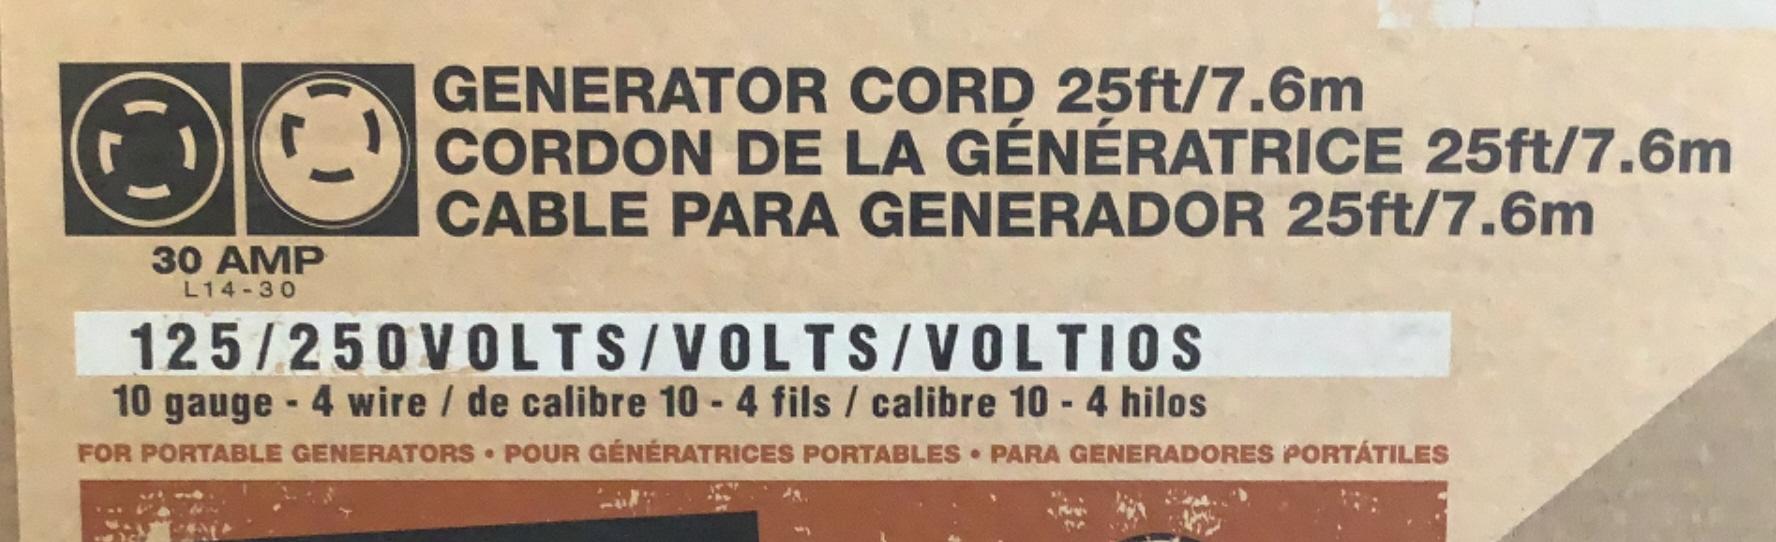 Generac 25' Generator Cord